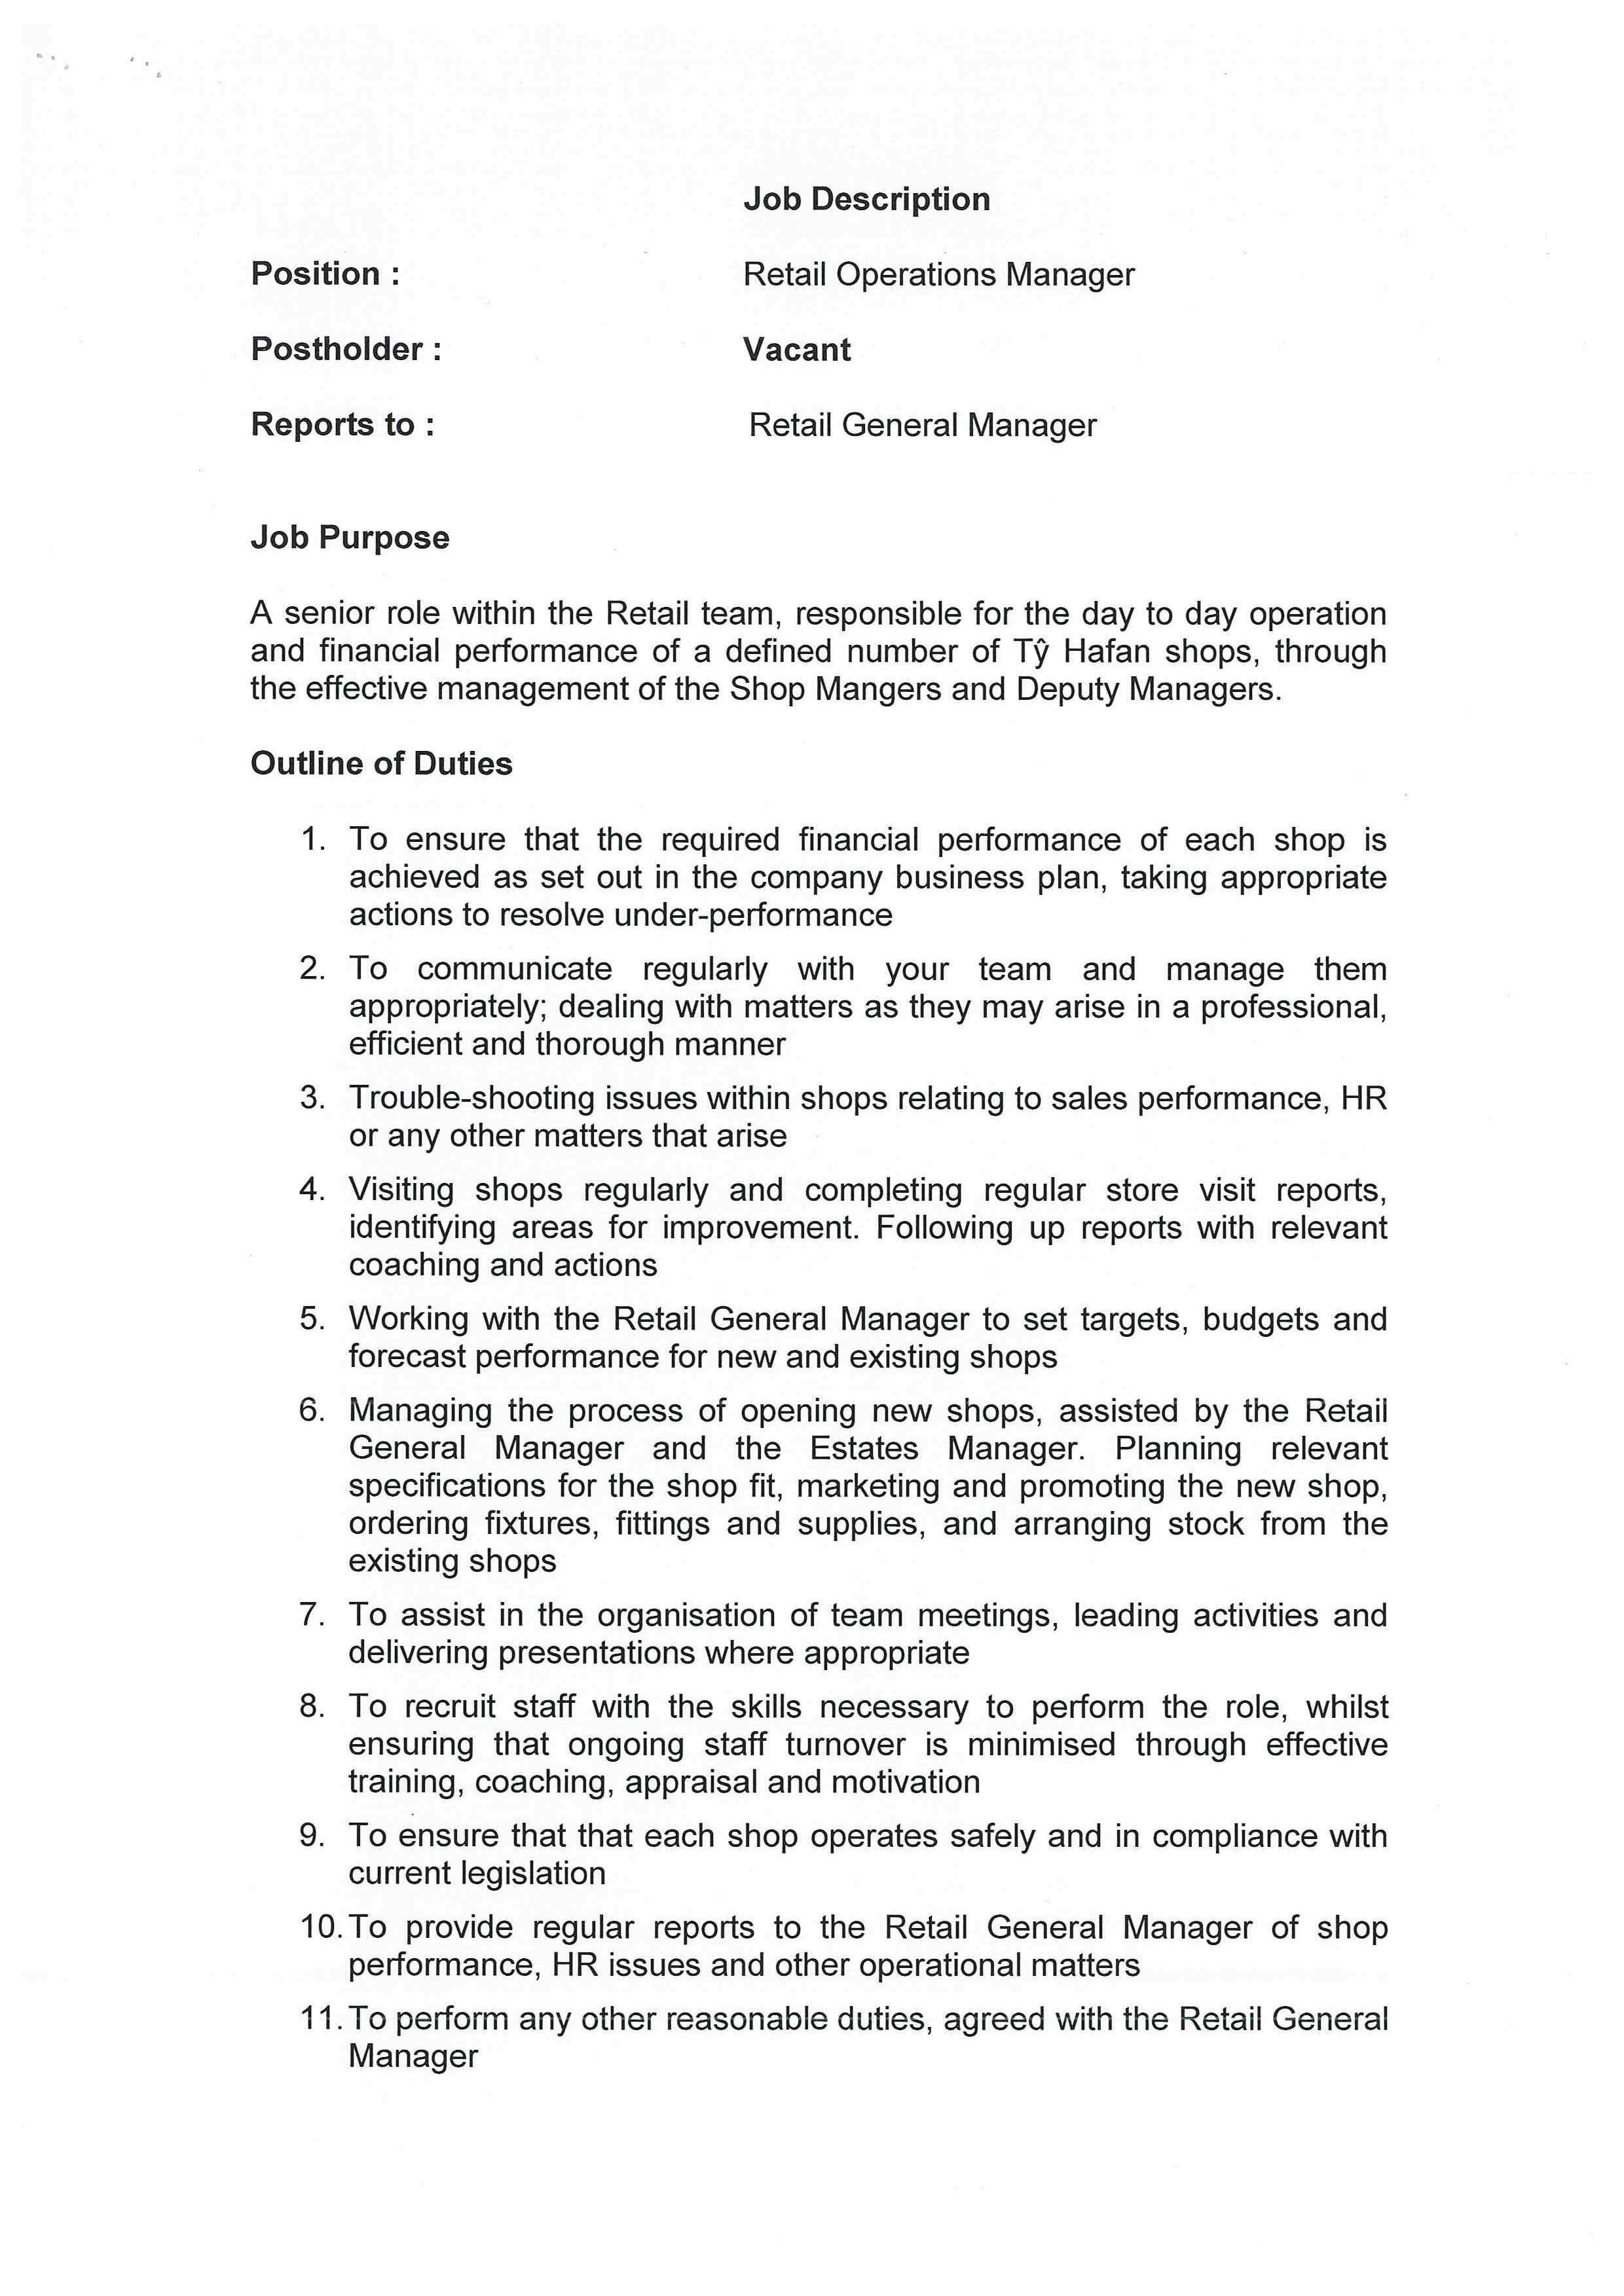 Retail General Manager Job Vacancy Description template main image